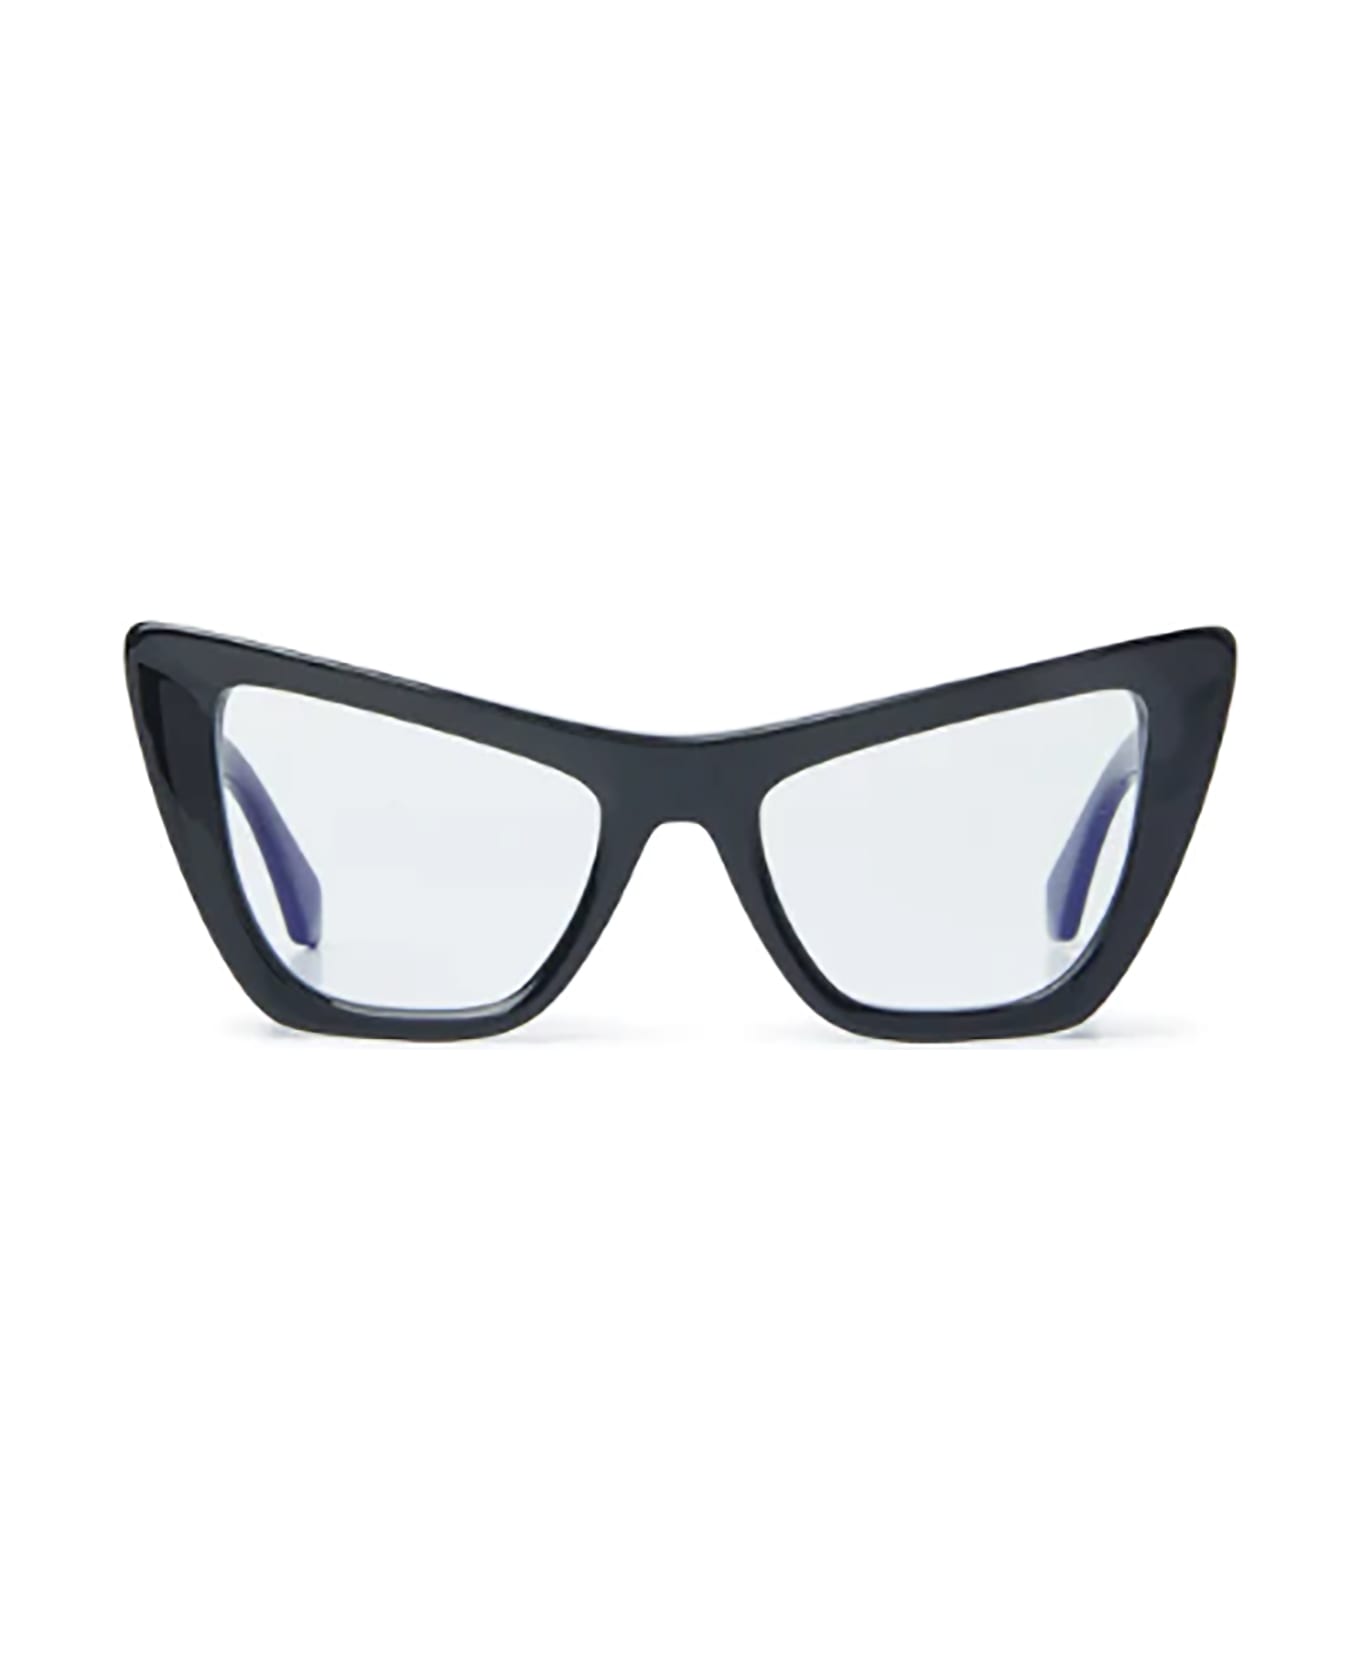 Off-White AF OPTICAL 11 BLACK BLUE BLOCK Eyewear - Black アイウェア